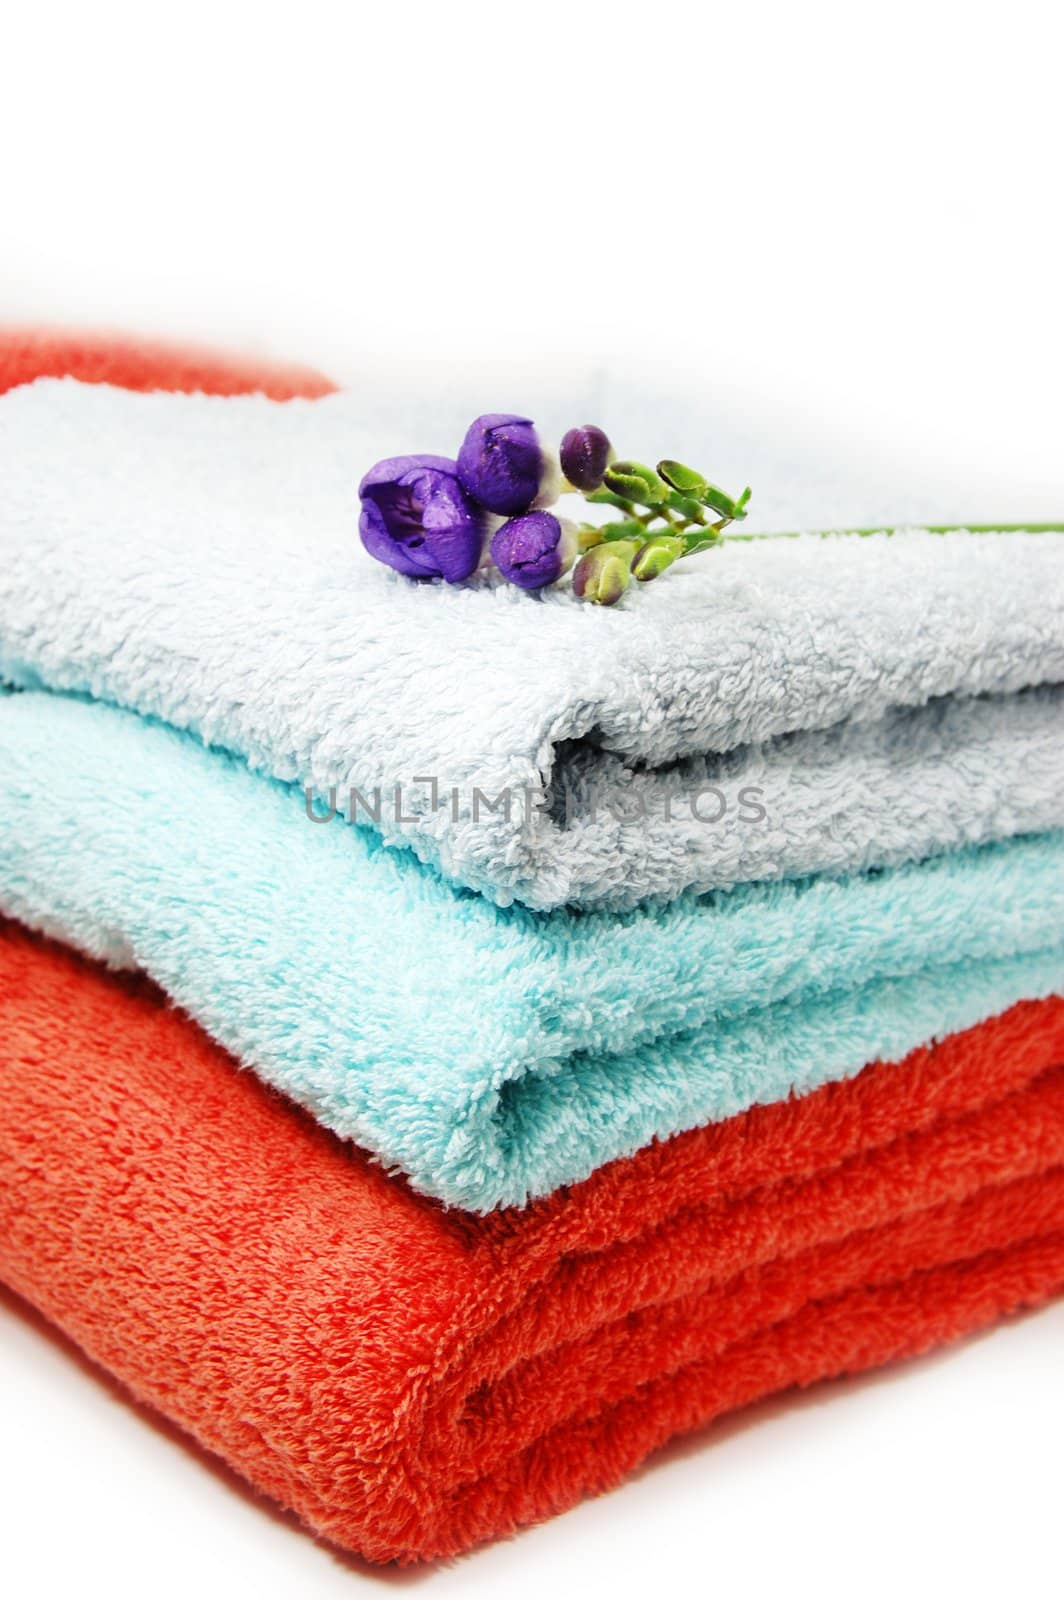 towels in pile anf violet flower